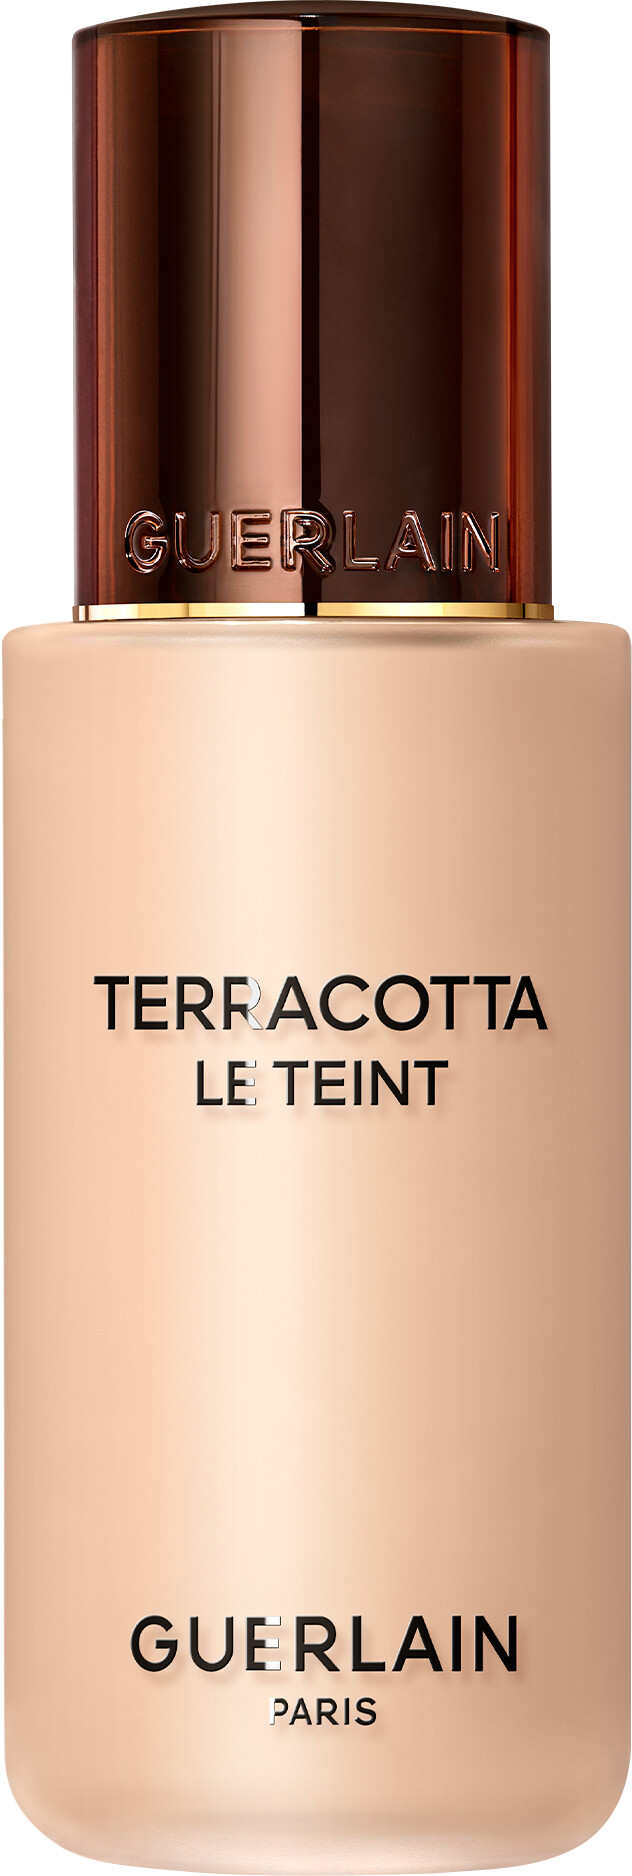 GUERLAIN Terracotta Le Teint Healthy Glow Foundation 35ml 2C - Cool/Rose